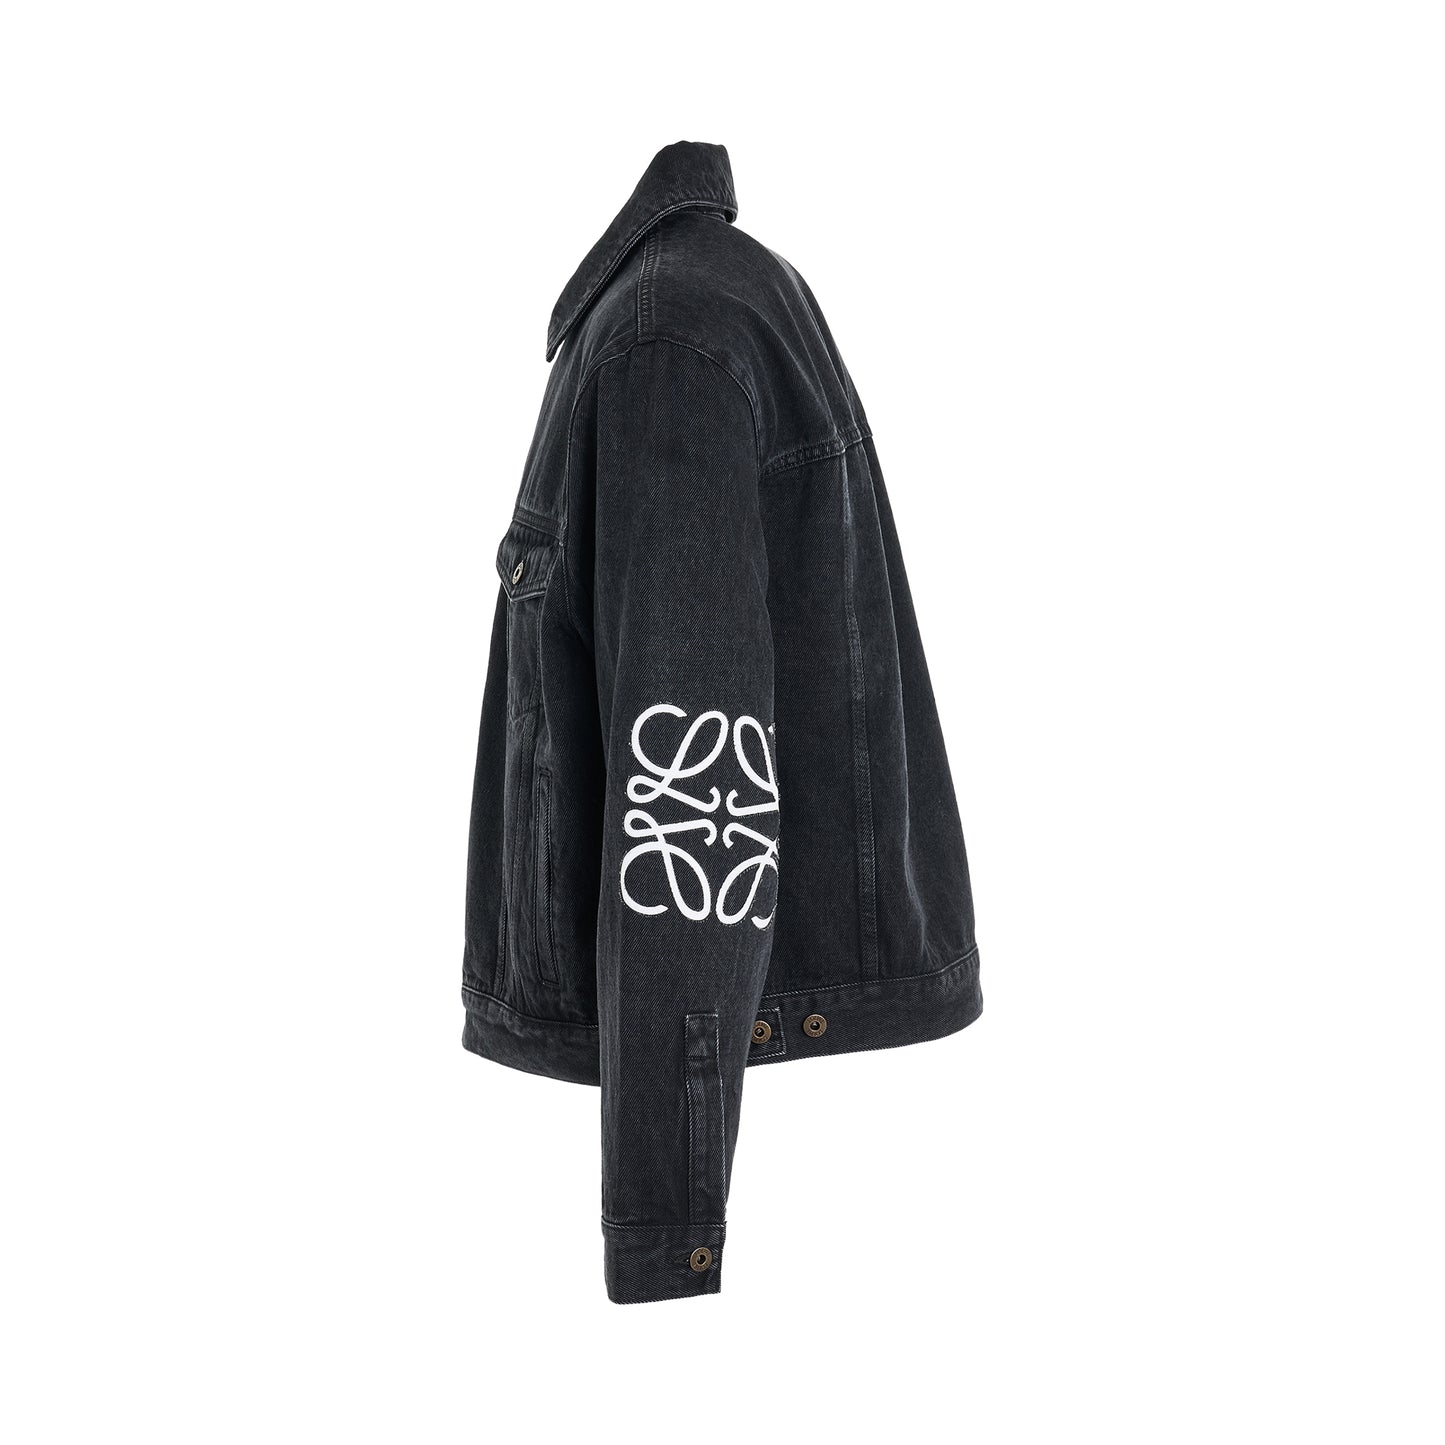 Anagram Jacket in Black Denim